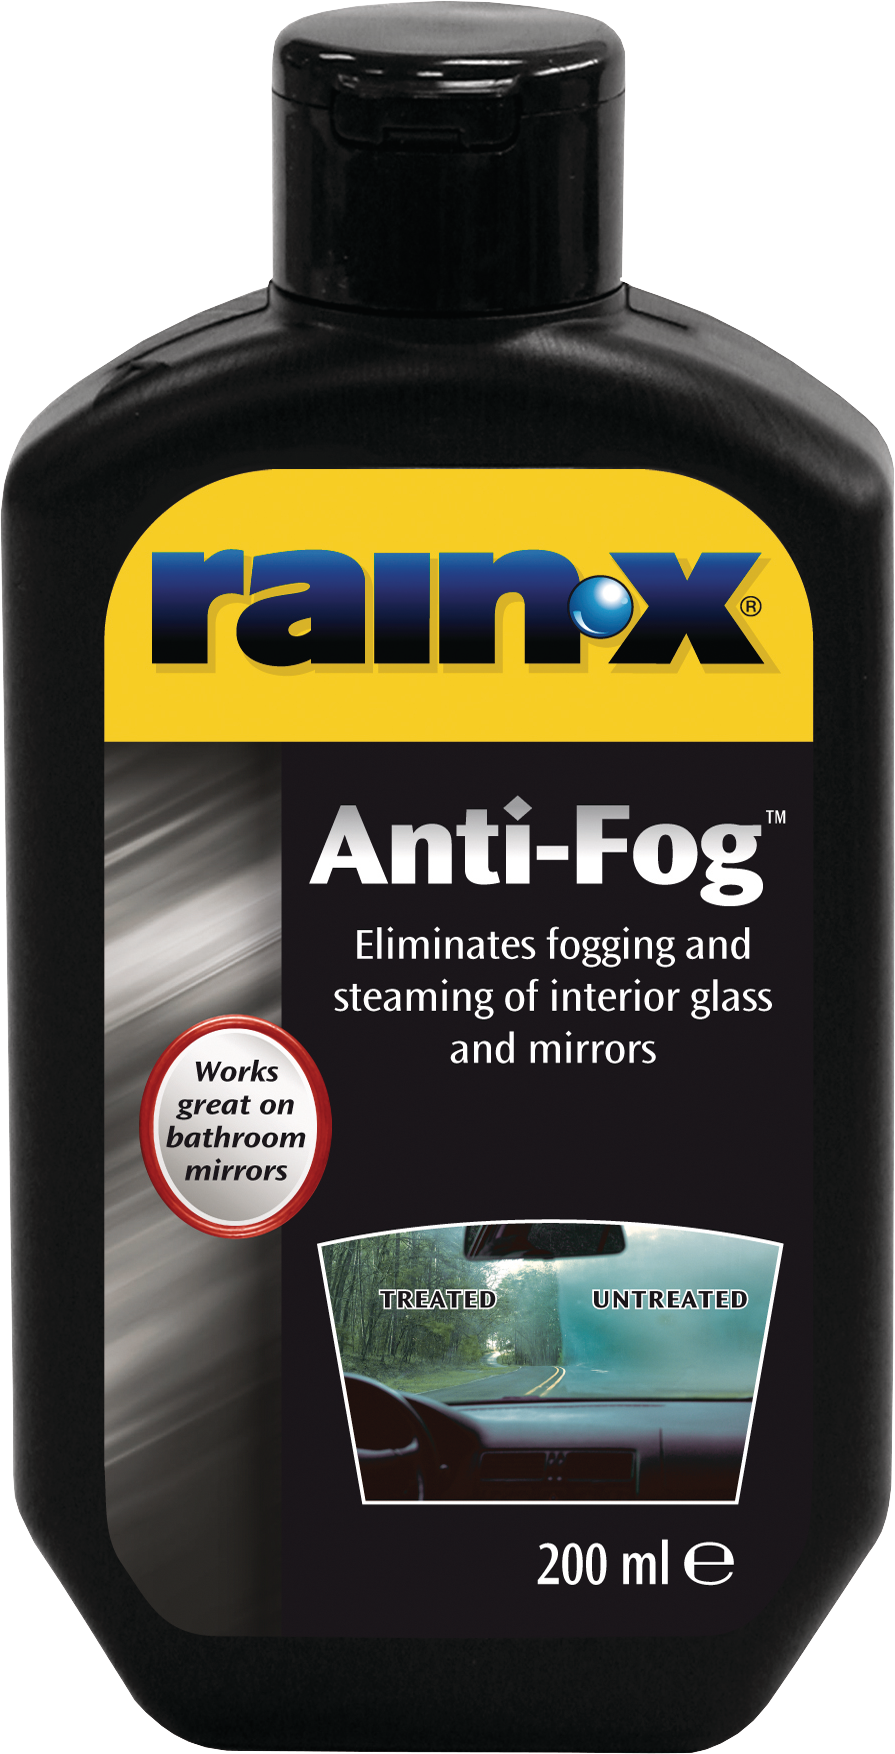 Granville  Product Information - Rain-X Anti-Fog